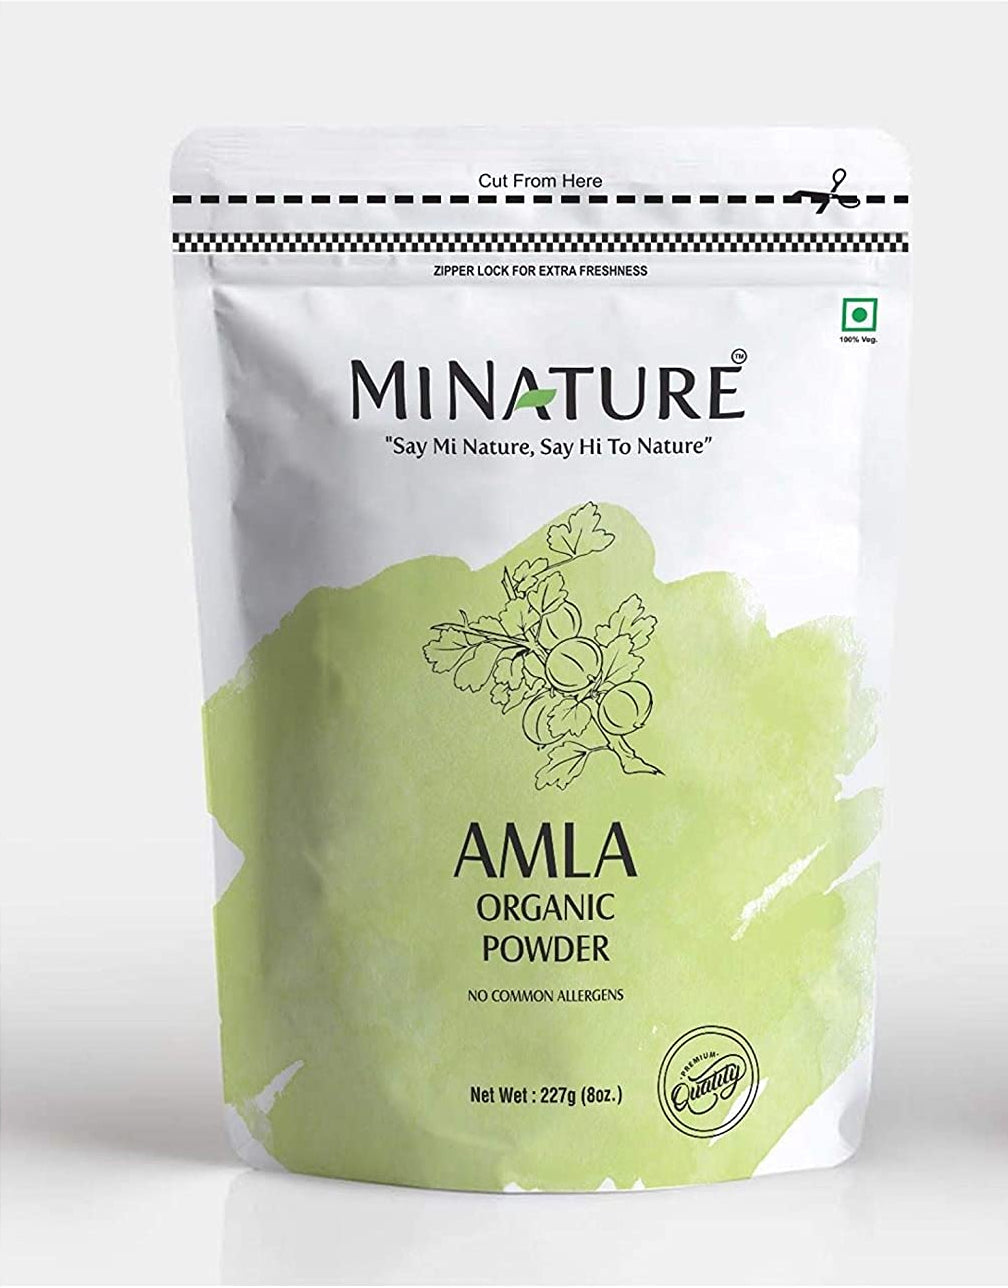 Ayurveda Store NZ, Amla Powder, Organic, Usda Certified, Minature Amla Powder.